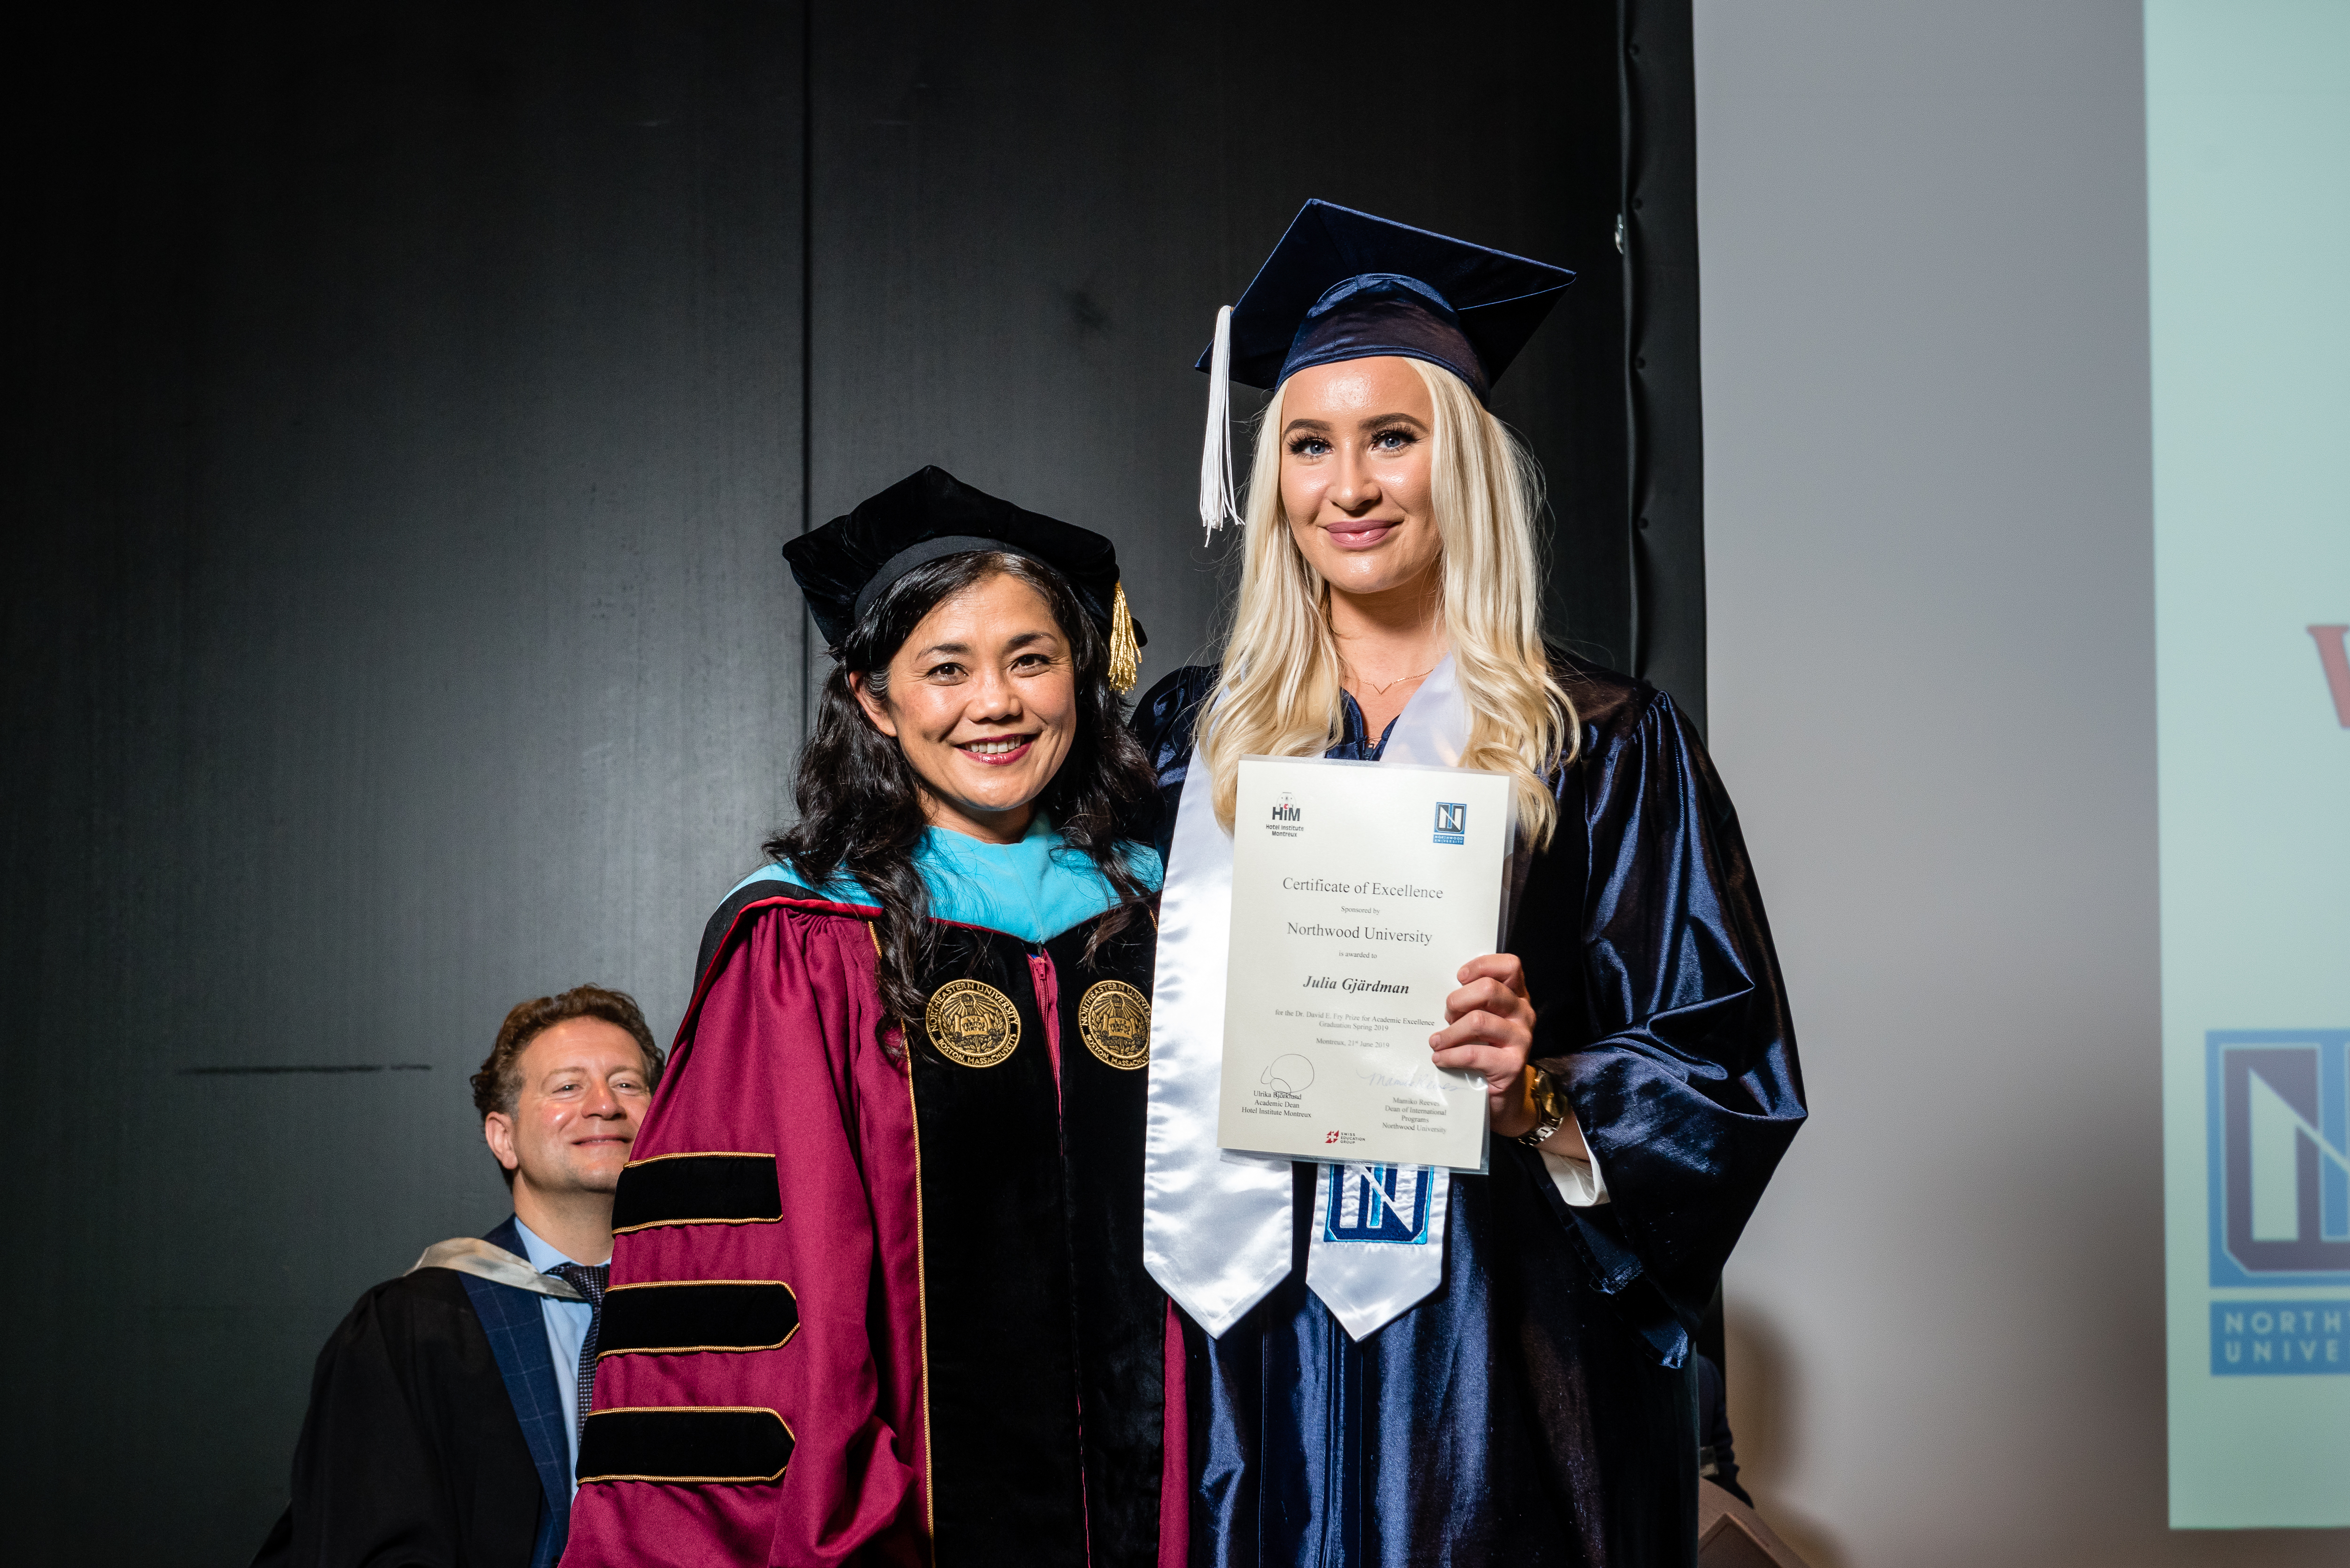  Hotel Institute Montreux student Julia GjÃ¤rdman at Graduation